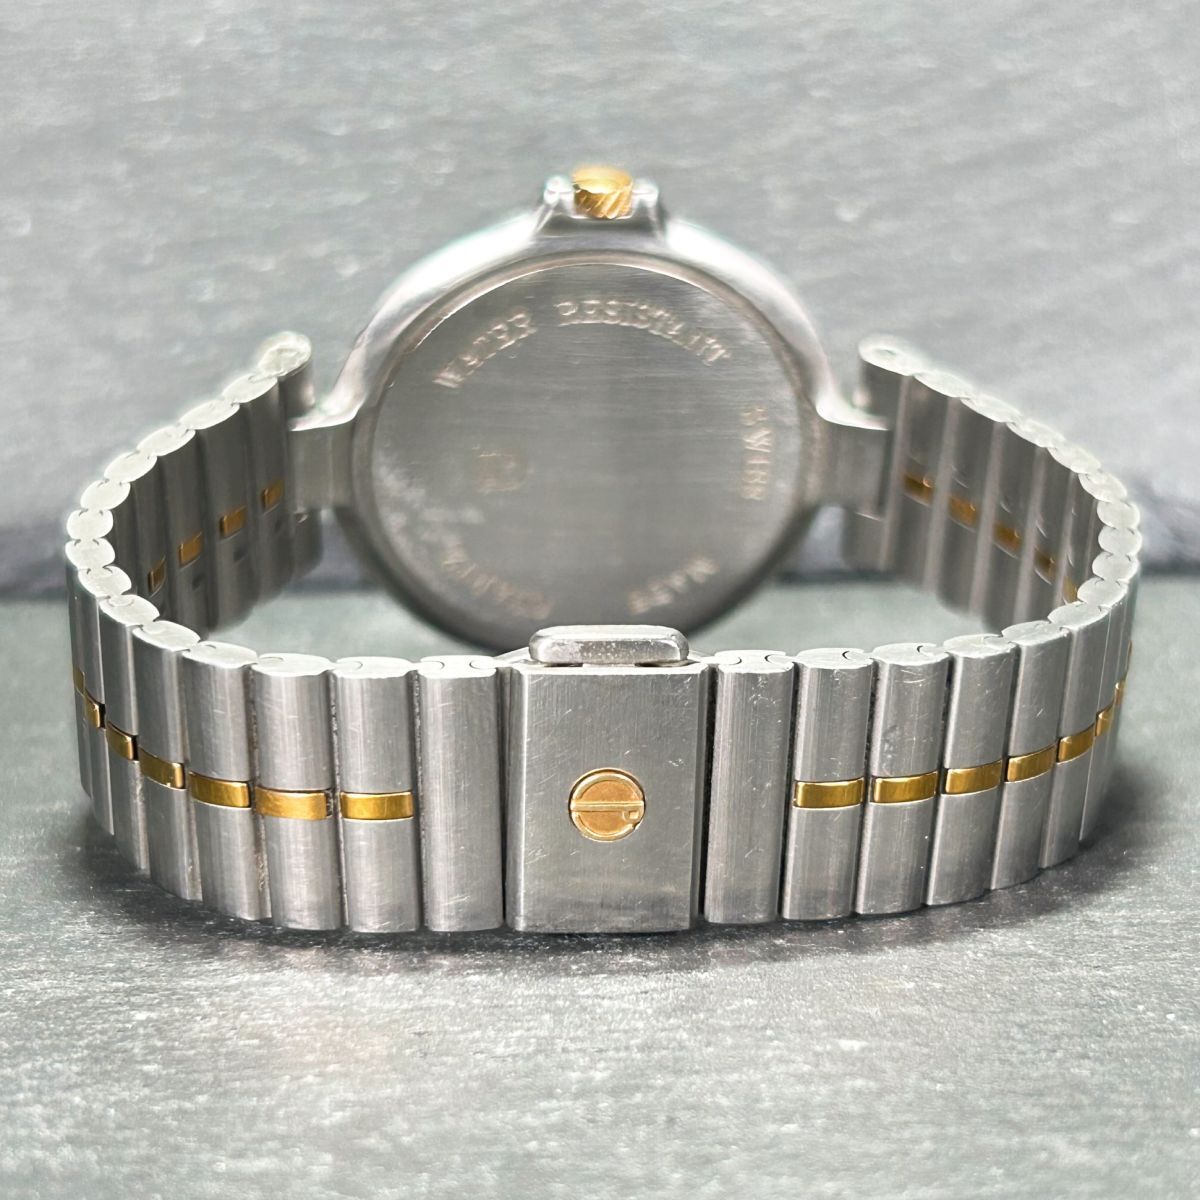 dunhill Dunhill millenium 7 28007 wristwatch quarts analogue calendar stainless steel Gold men's silver operation verification ending 